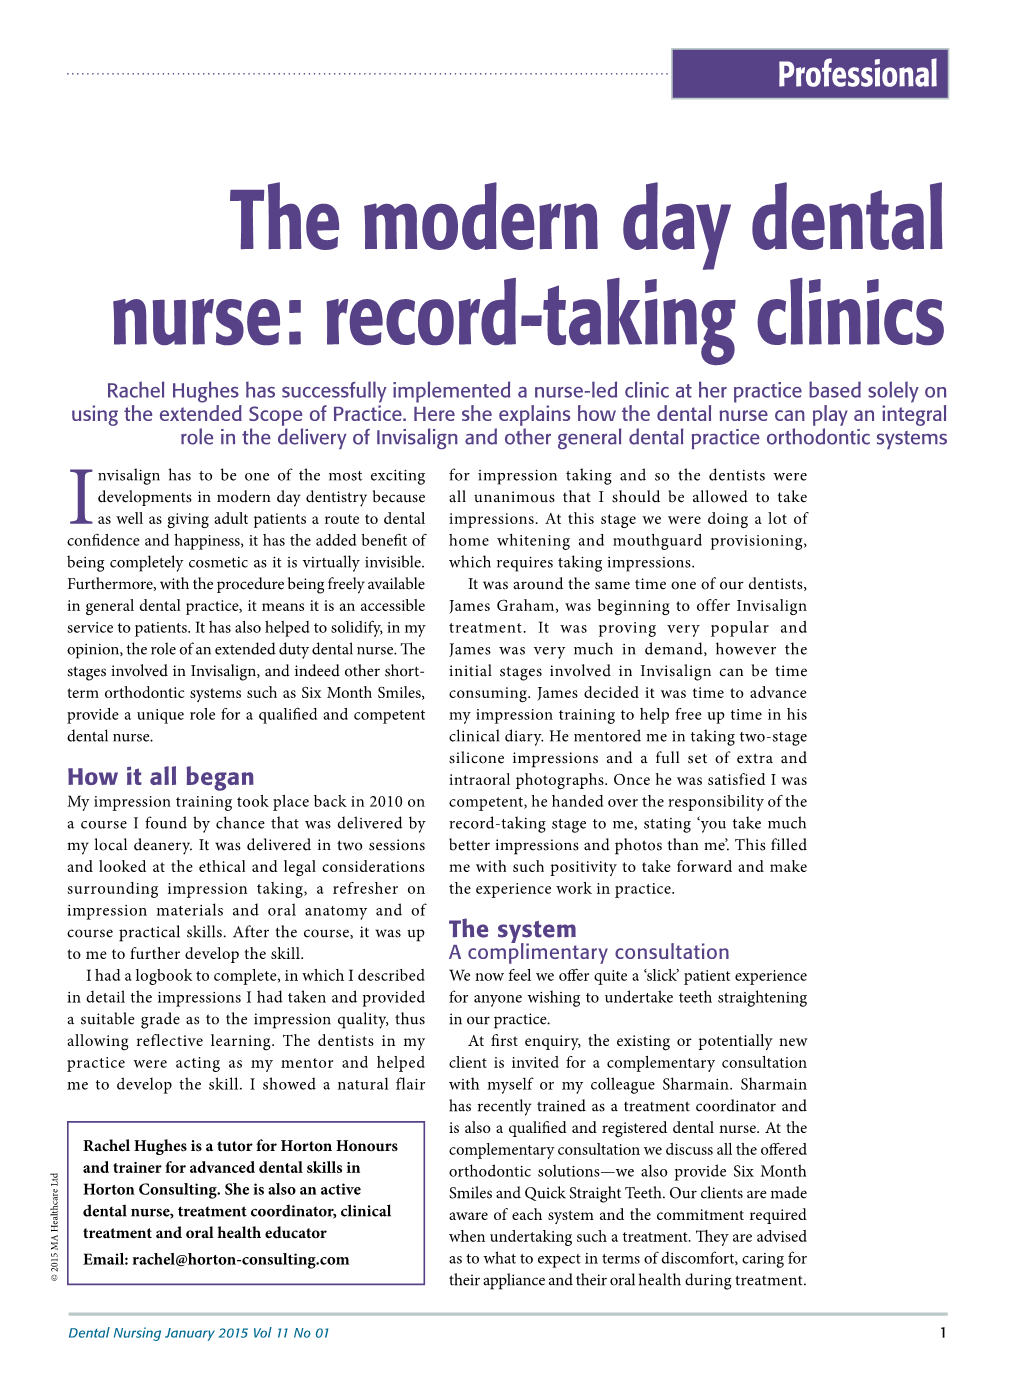 The Modern Day Dental Nurse: Record-Taking Clinics